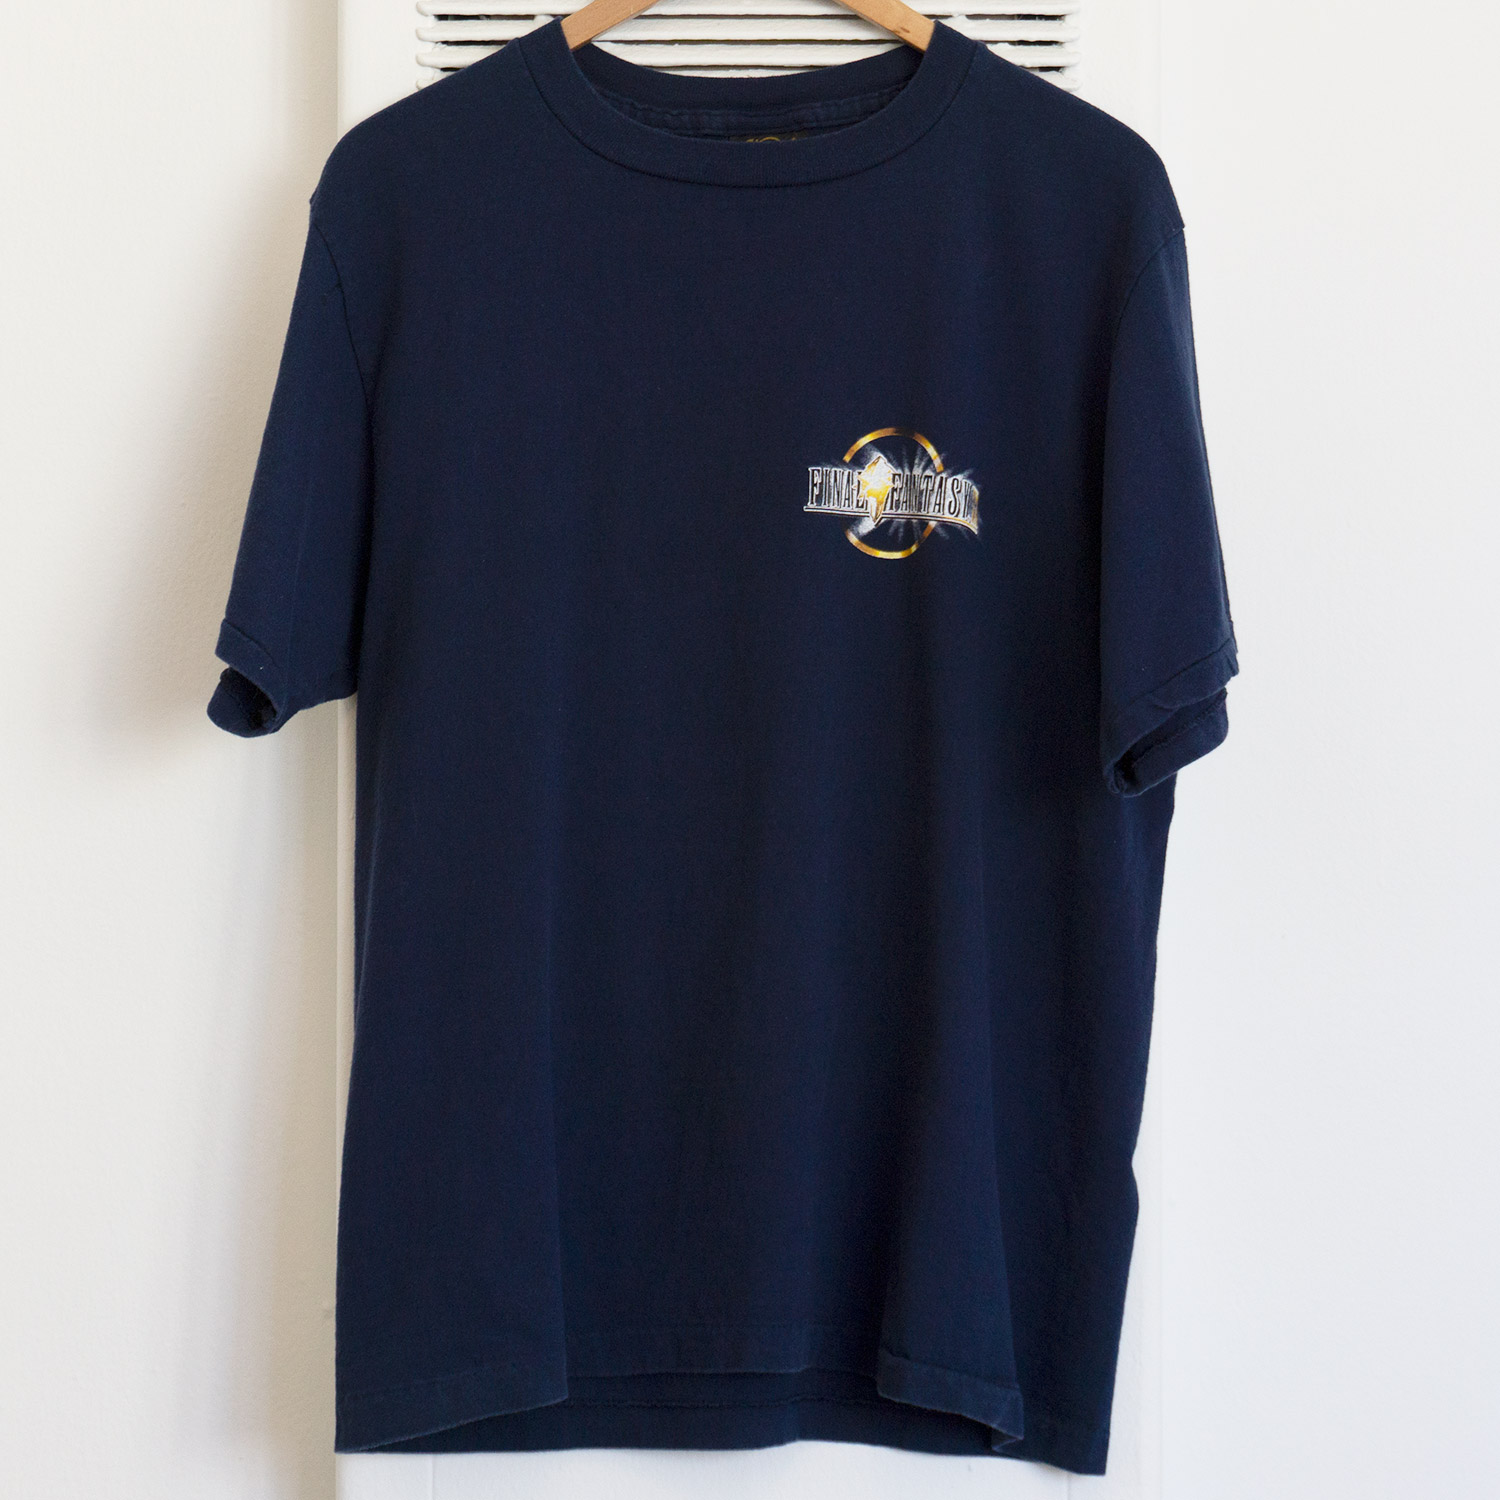 Vintage Navy Final Fantasy IX T-shirt, Front